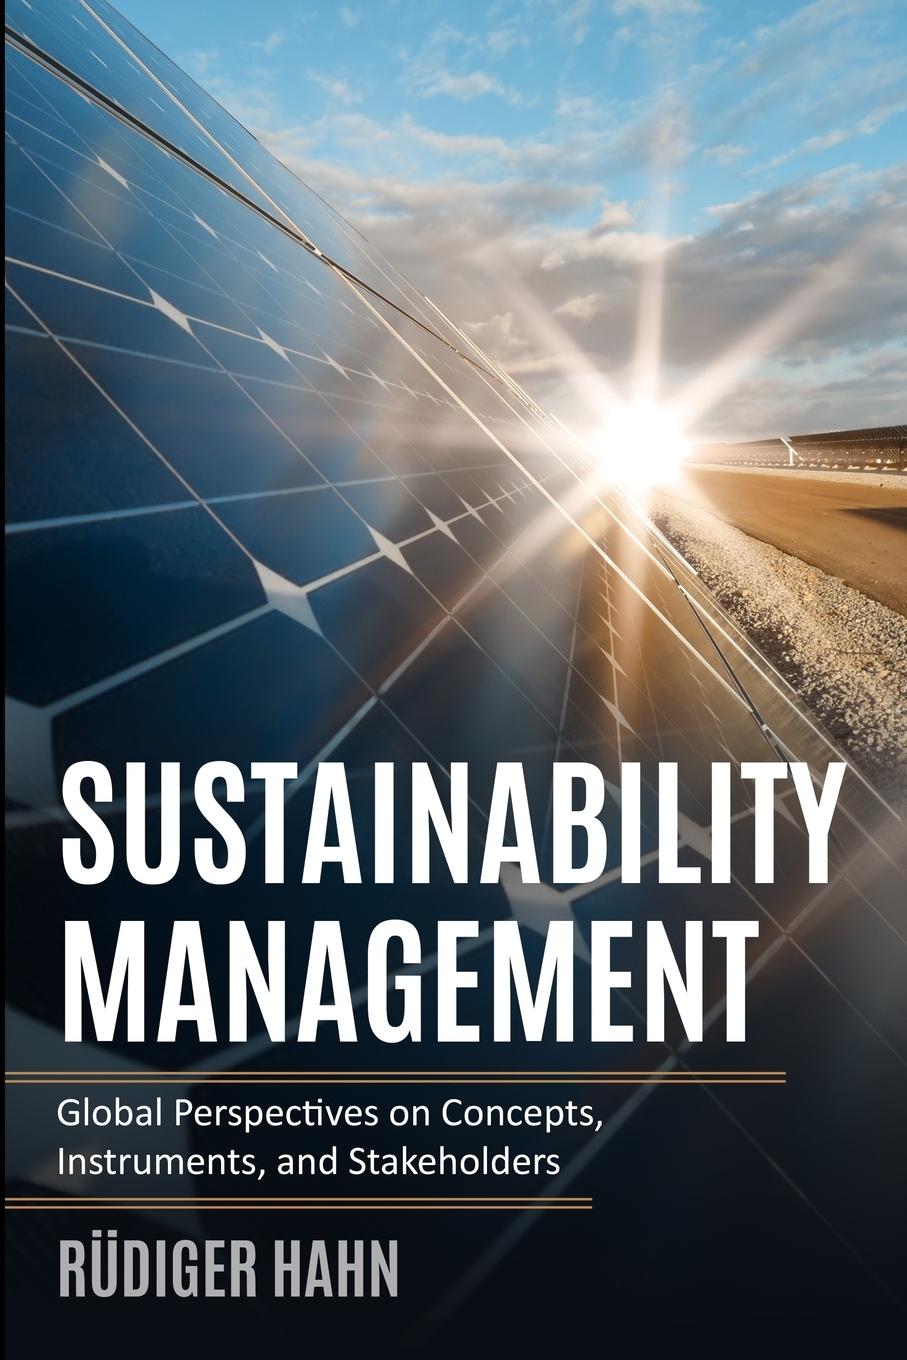 Könyv Sustainability Management R DIGER HAHN